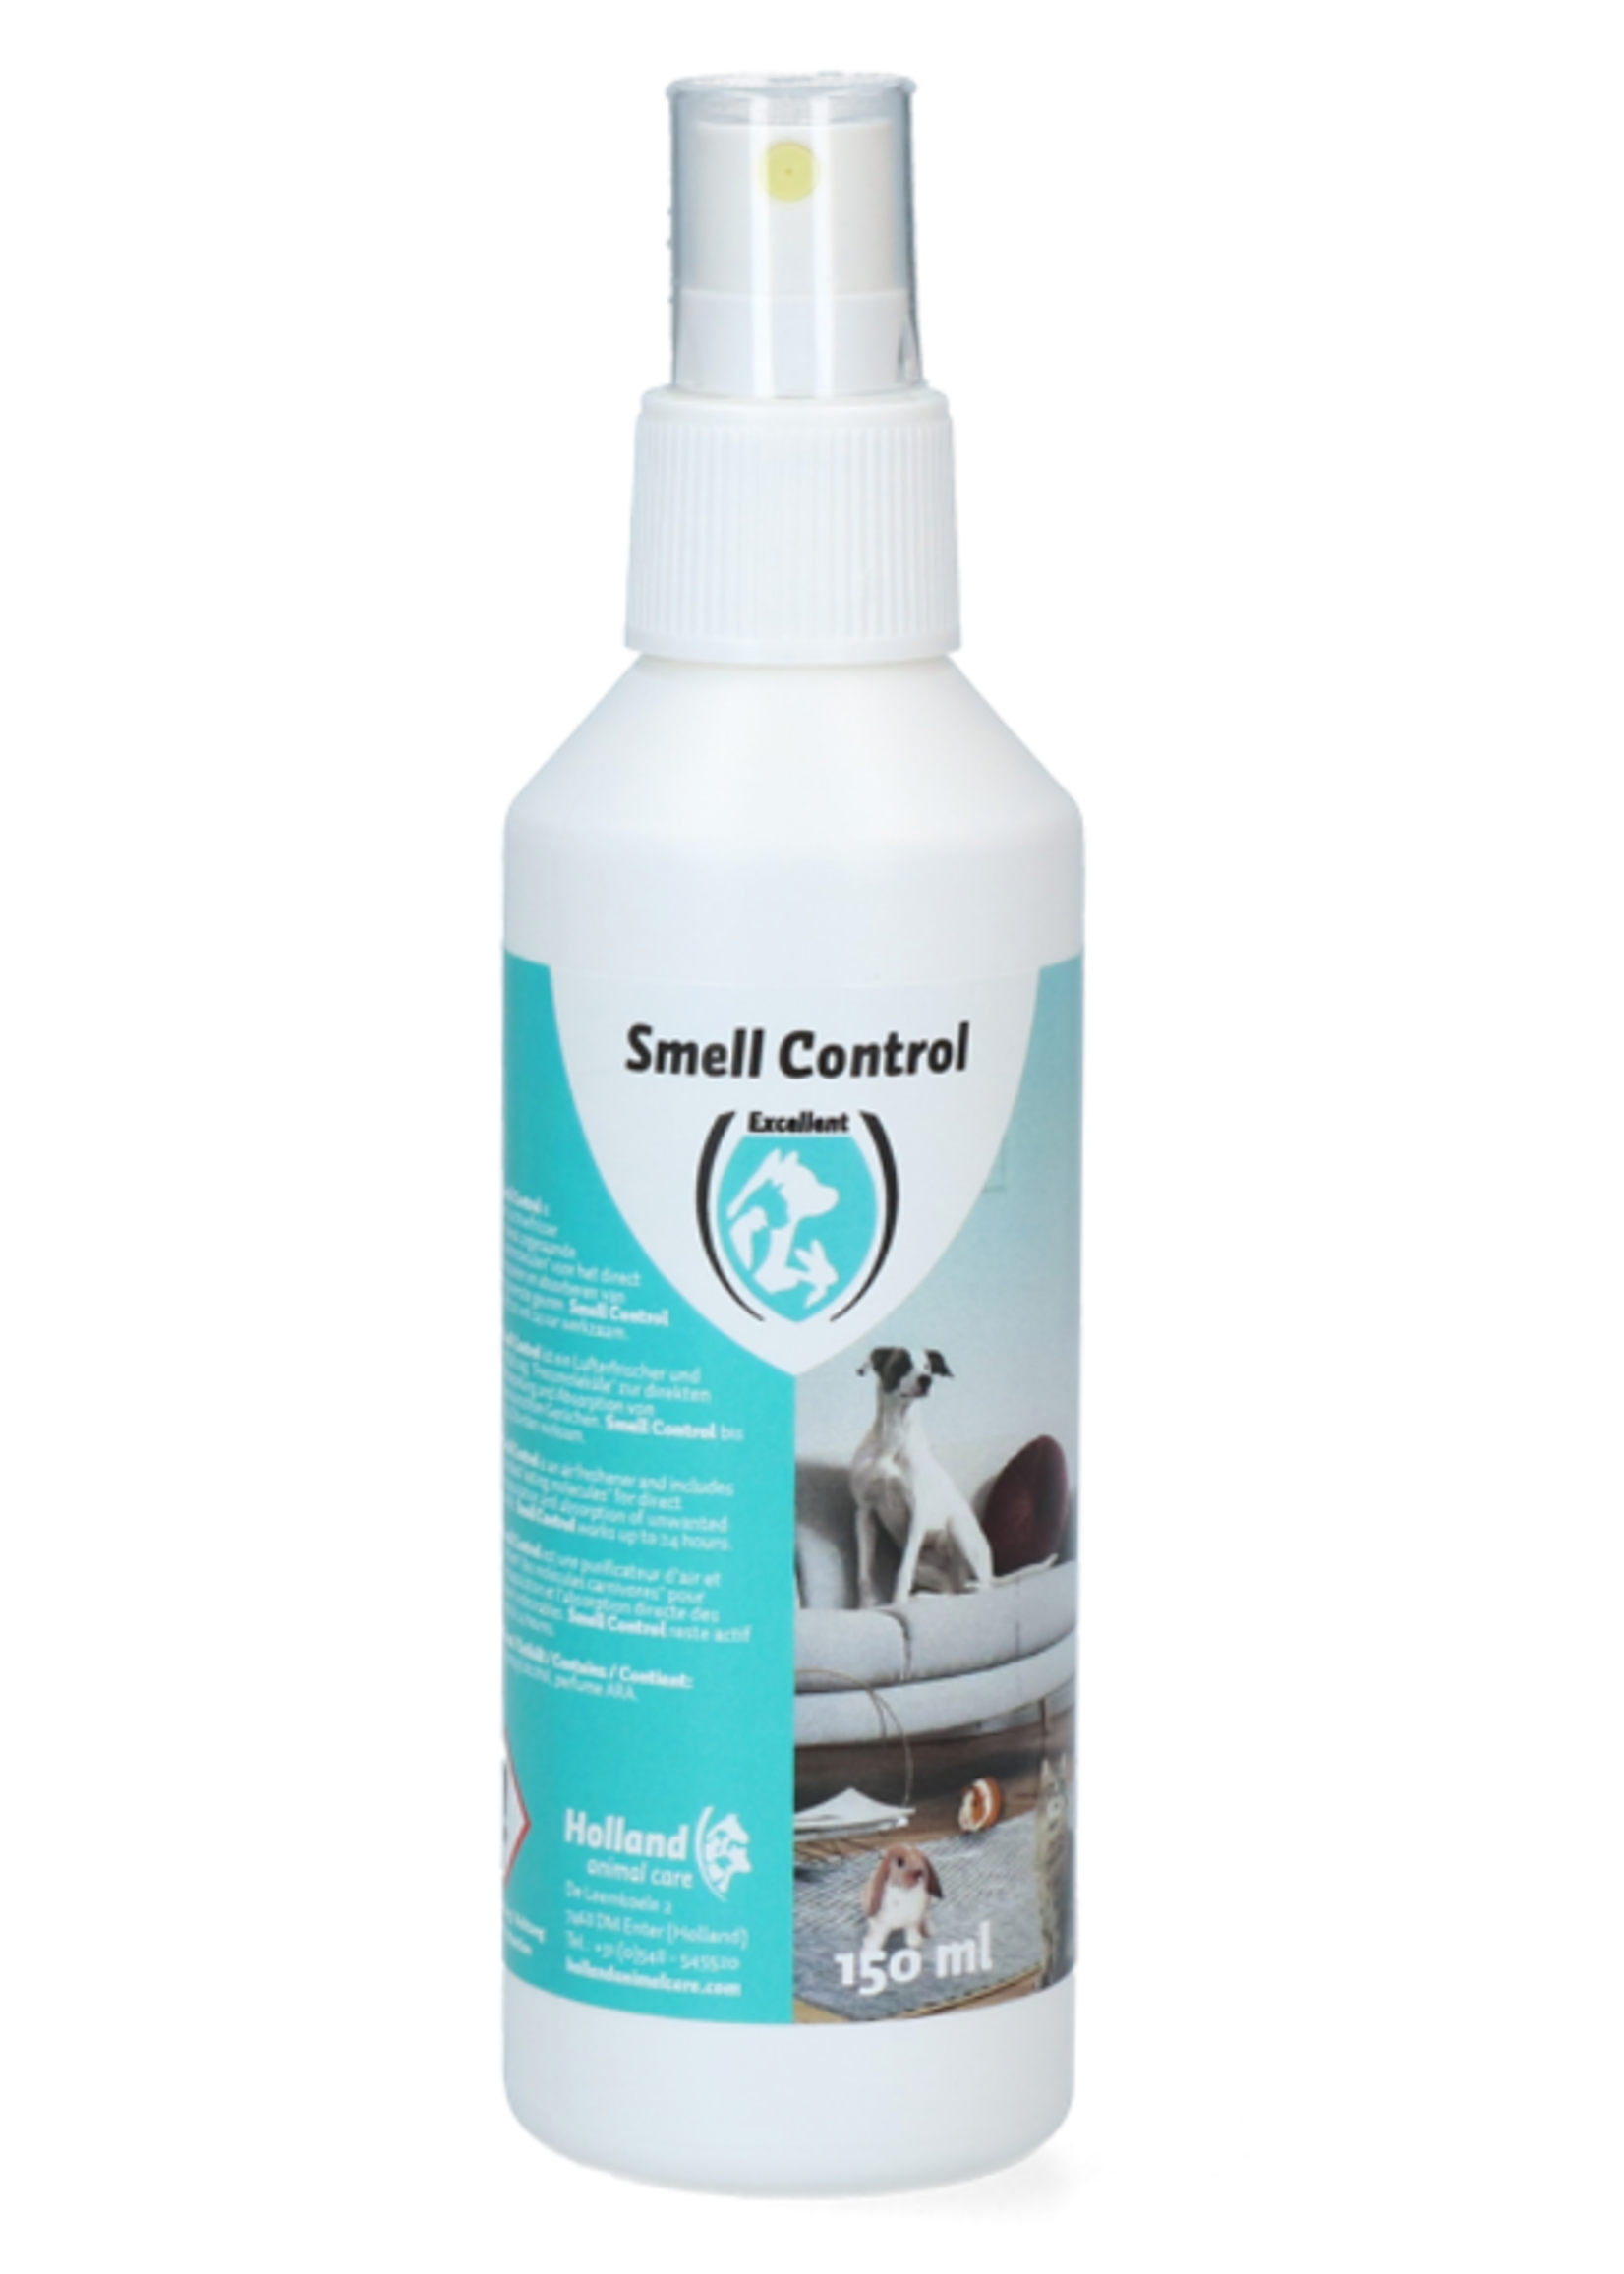 HAC Excellent Smell Control luchtverfrisser voor de hond!